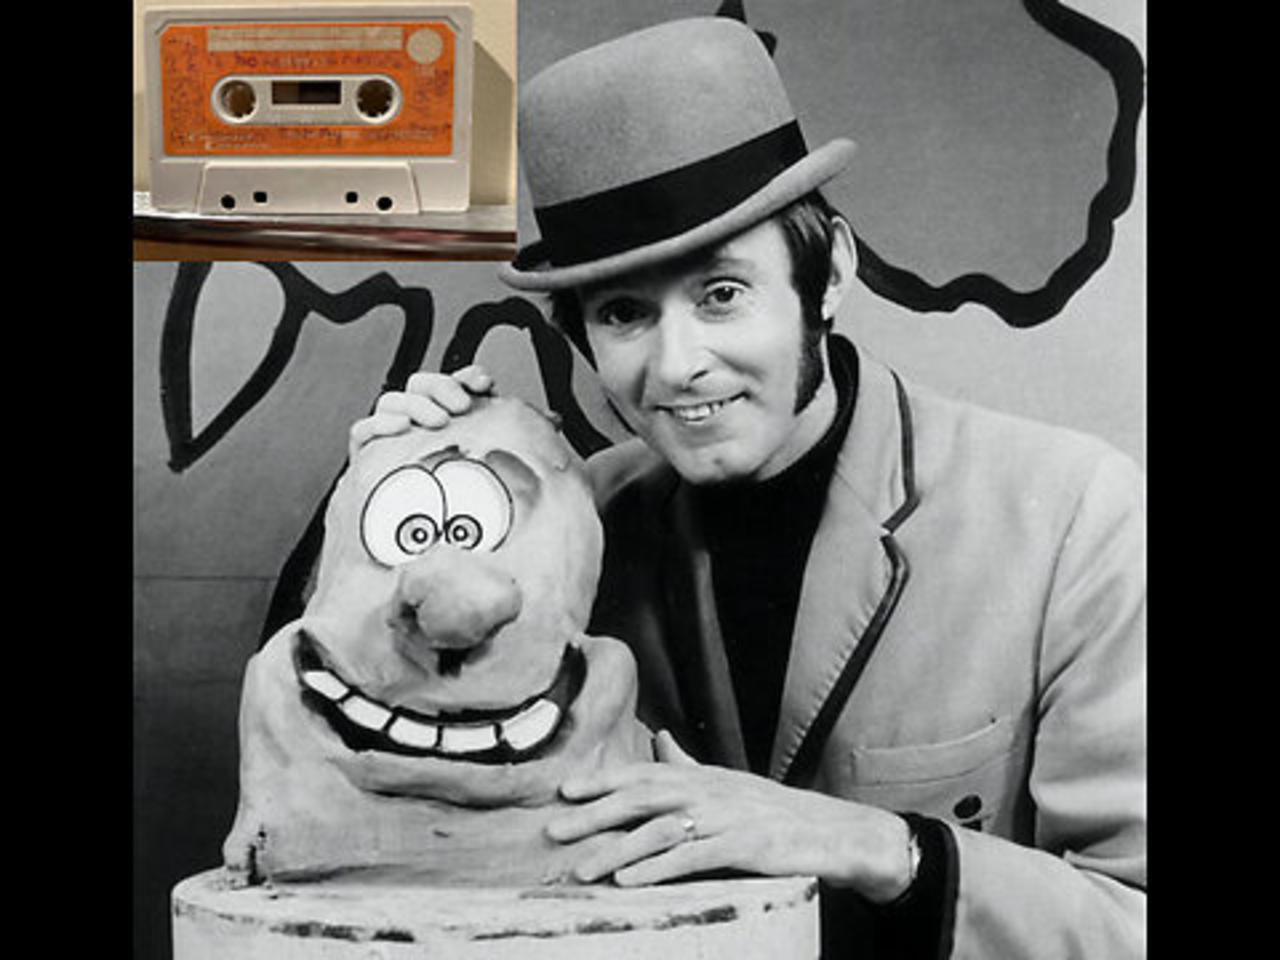 1973 - Audio Clip of Chicago's 'BJ & Dirty Dragon' Children's Show